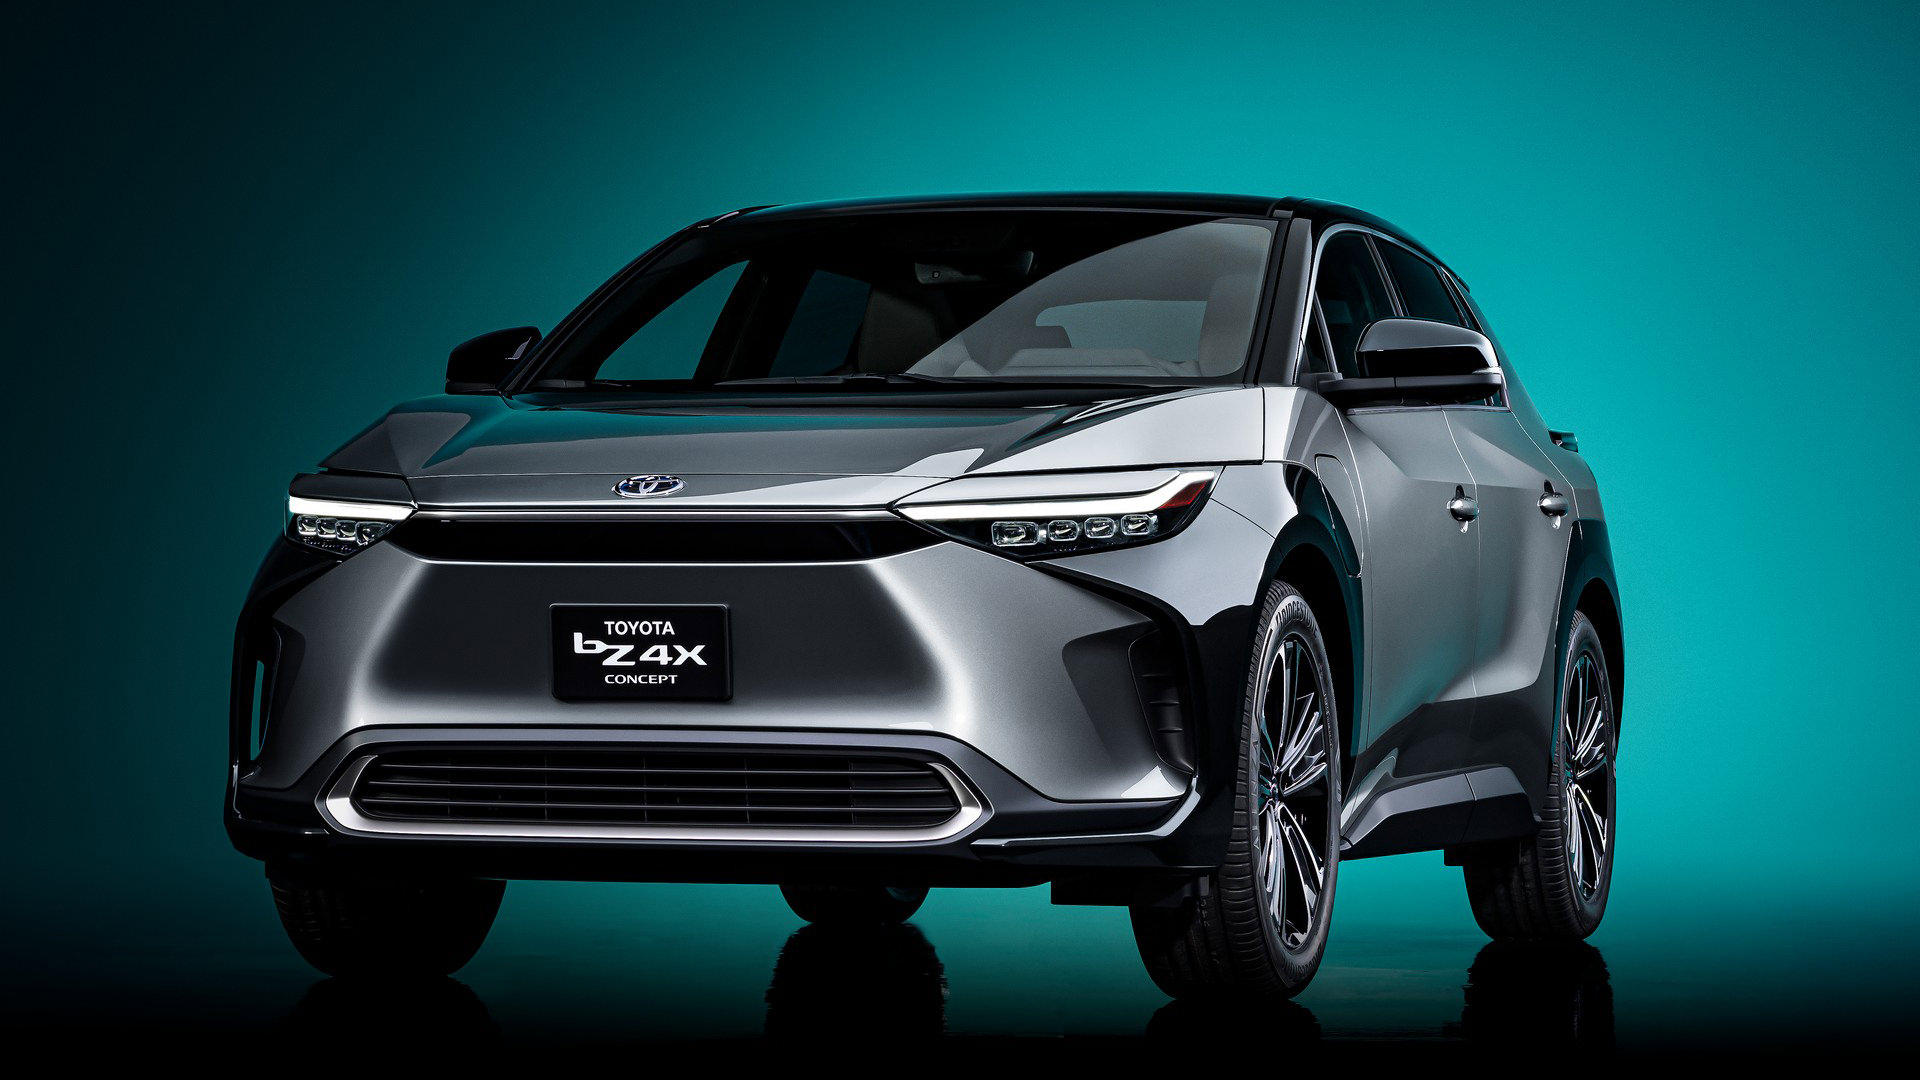 نمای جلو کراس اور مفهومی تویوتا / Toyota bZ4X Concept